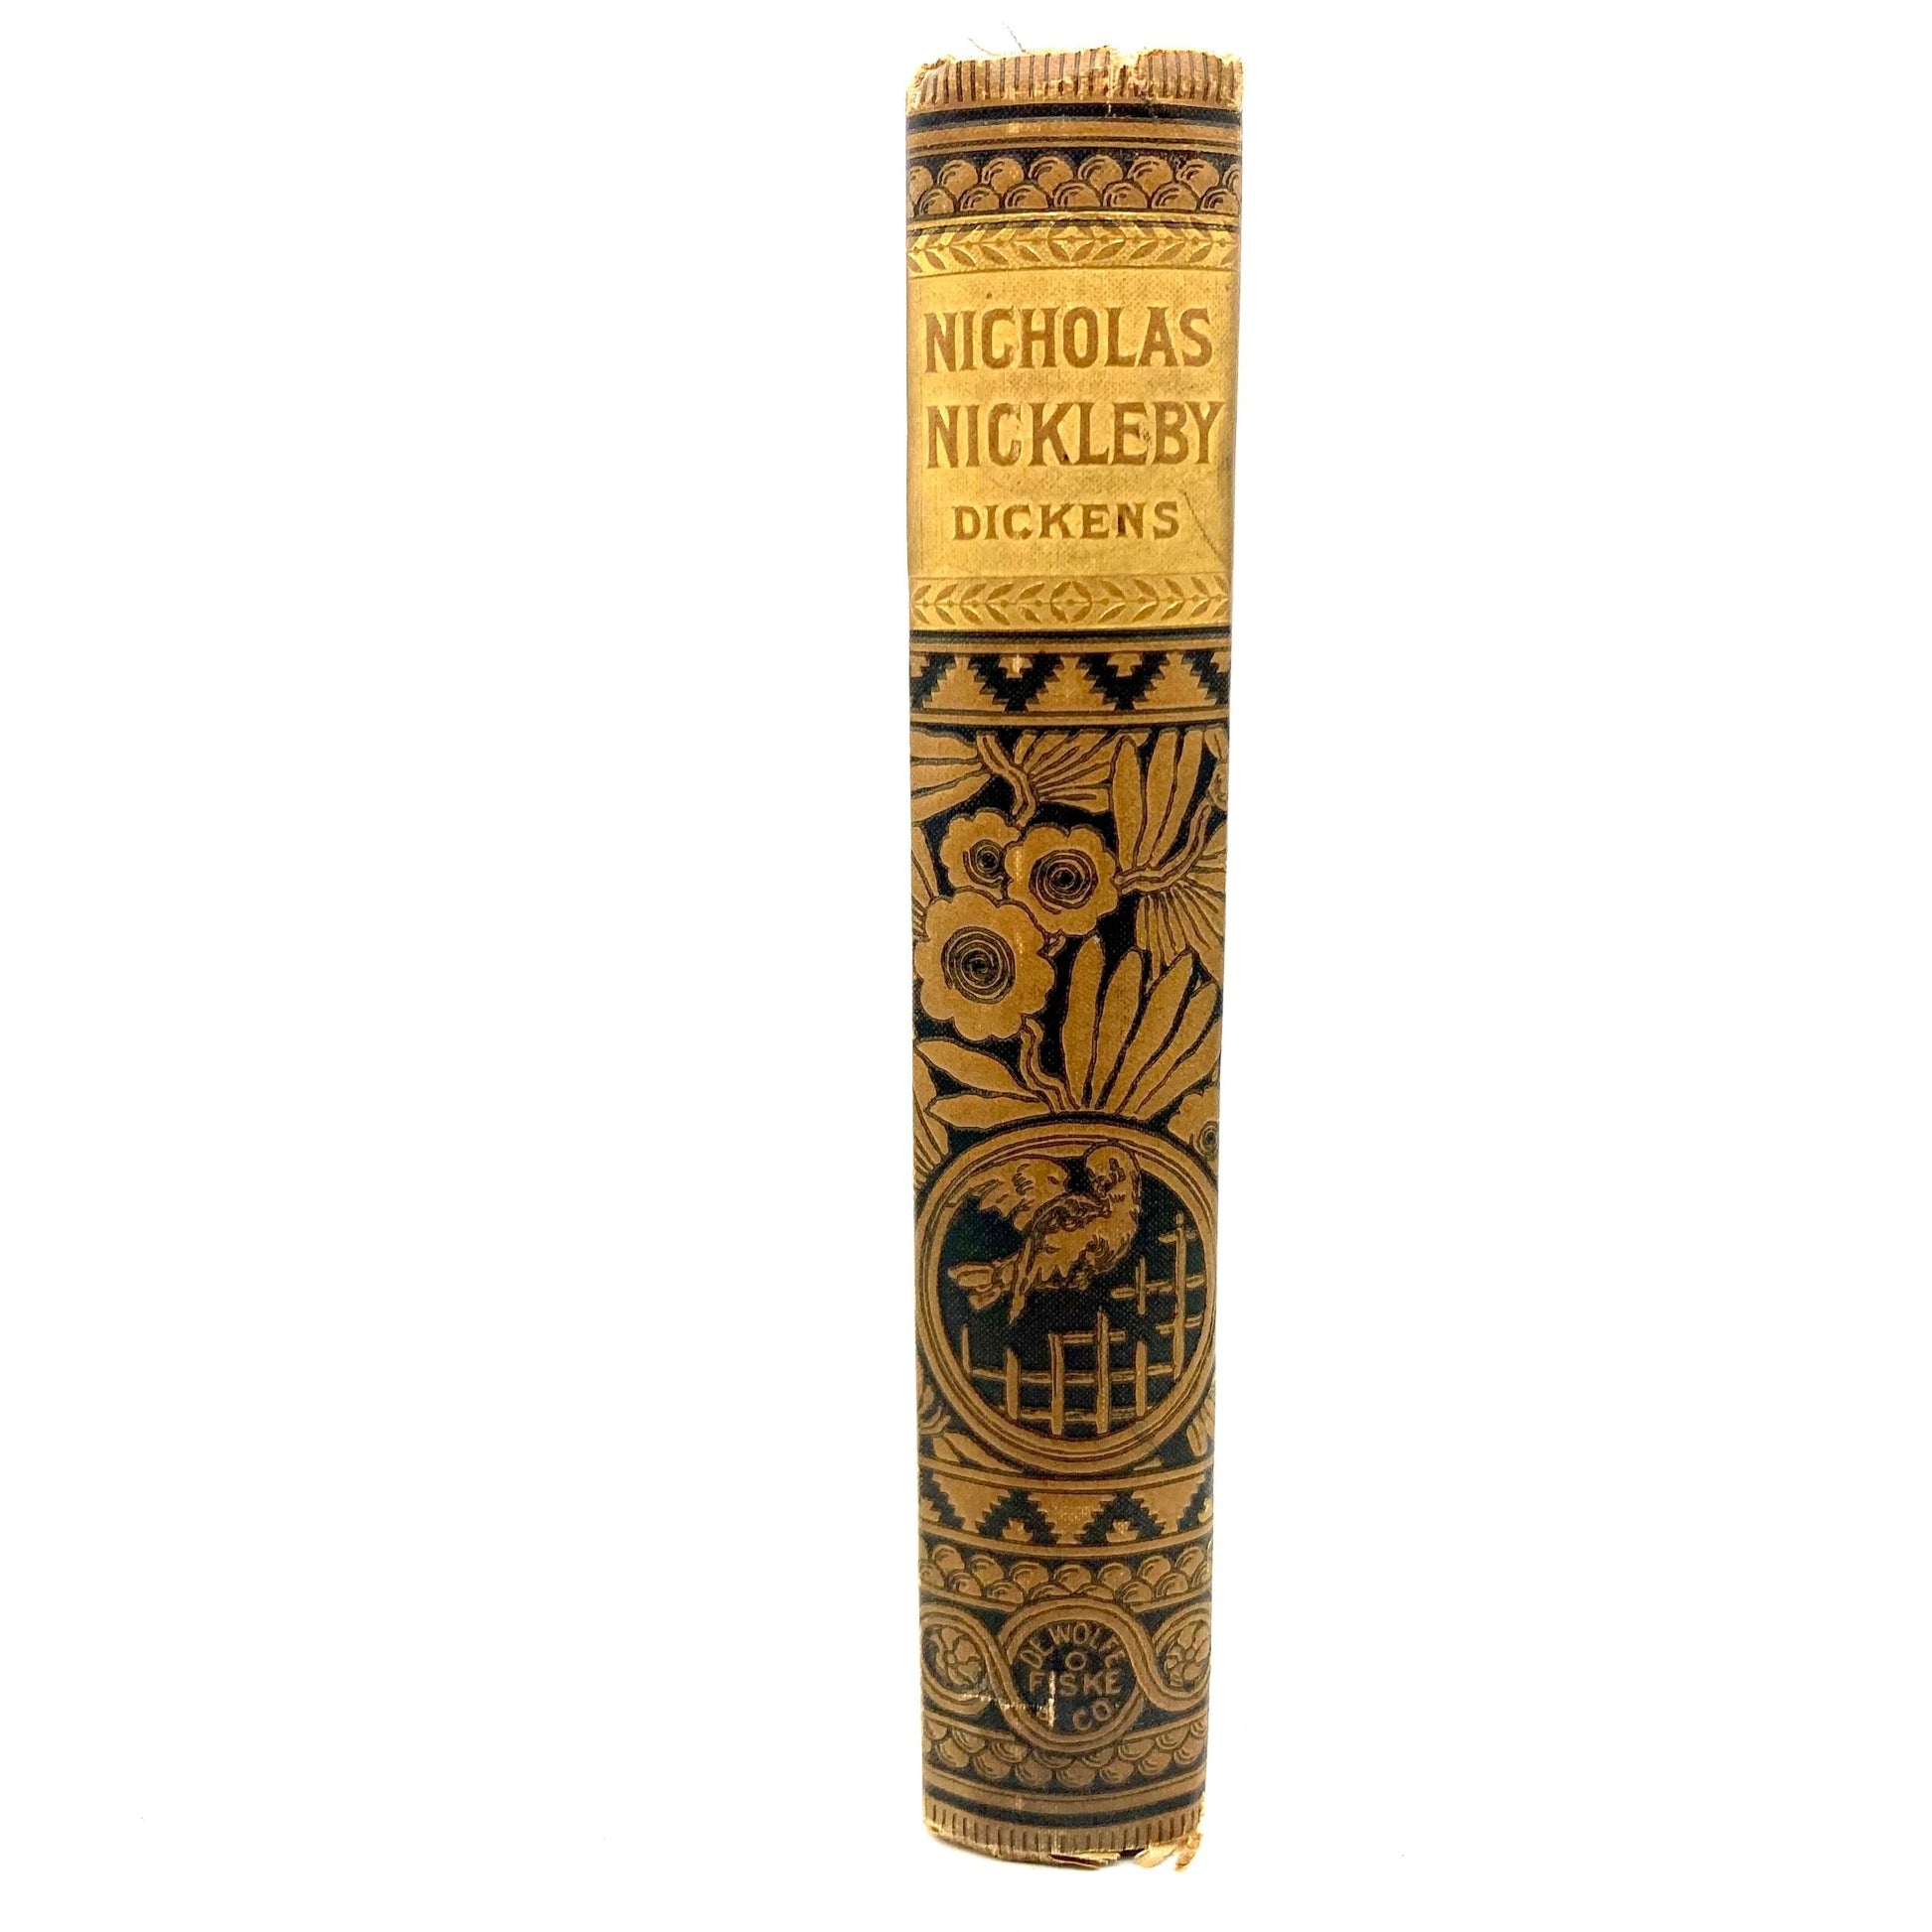 DICKENS, Charles "Nicholas Nickleby" [Dewolfe Fiske & Co, c1880s] - Buzz Bookstore